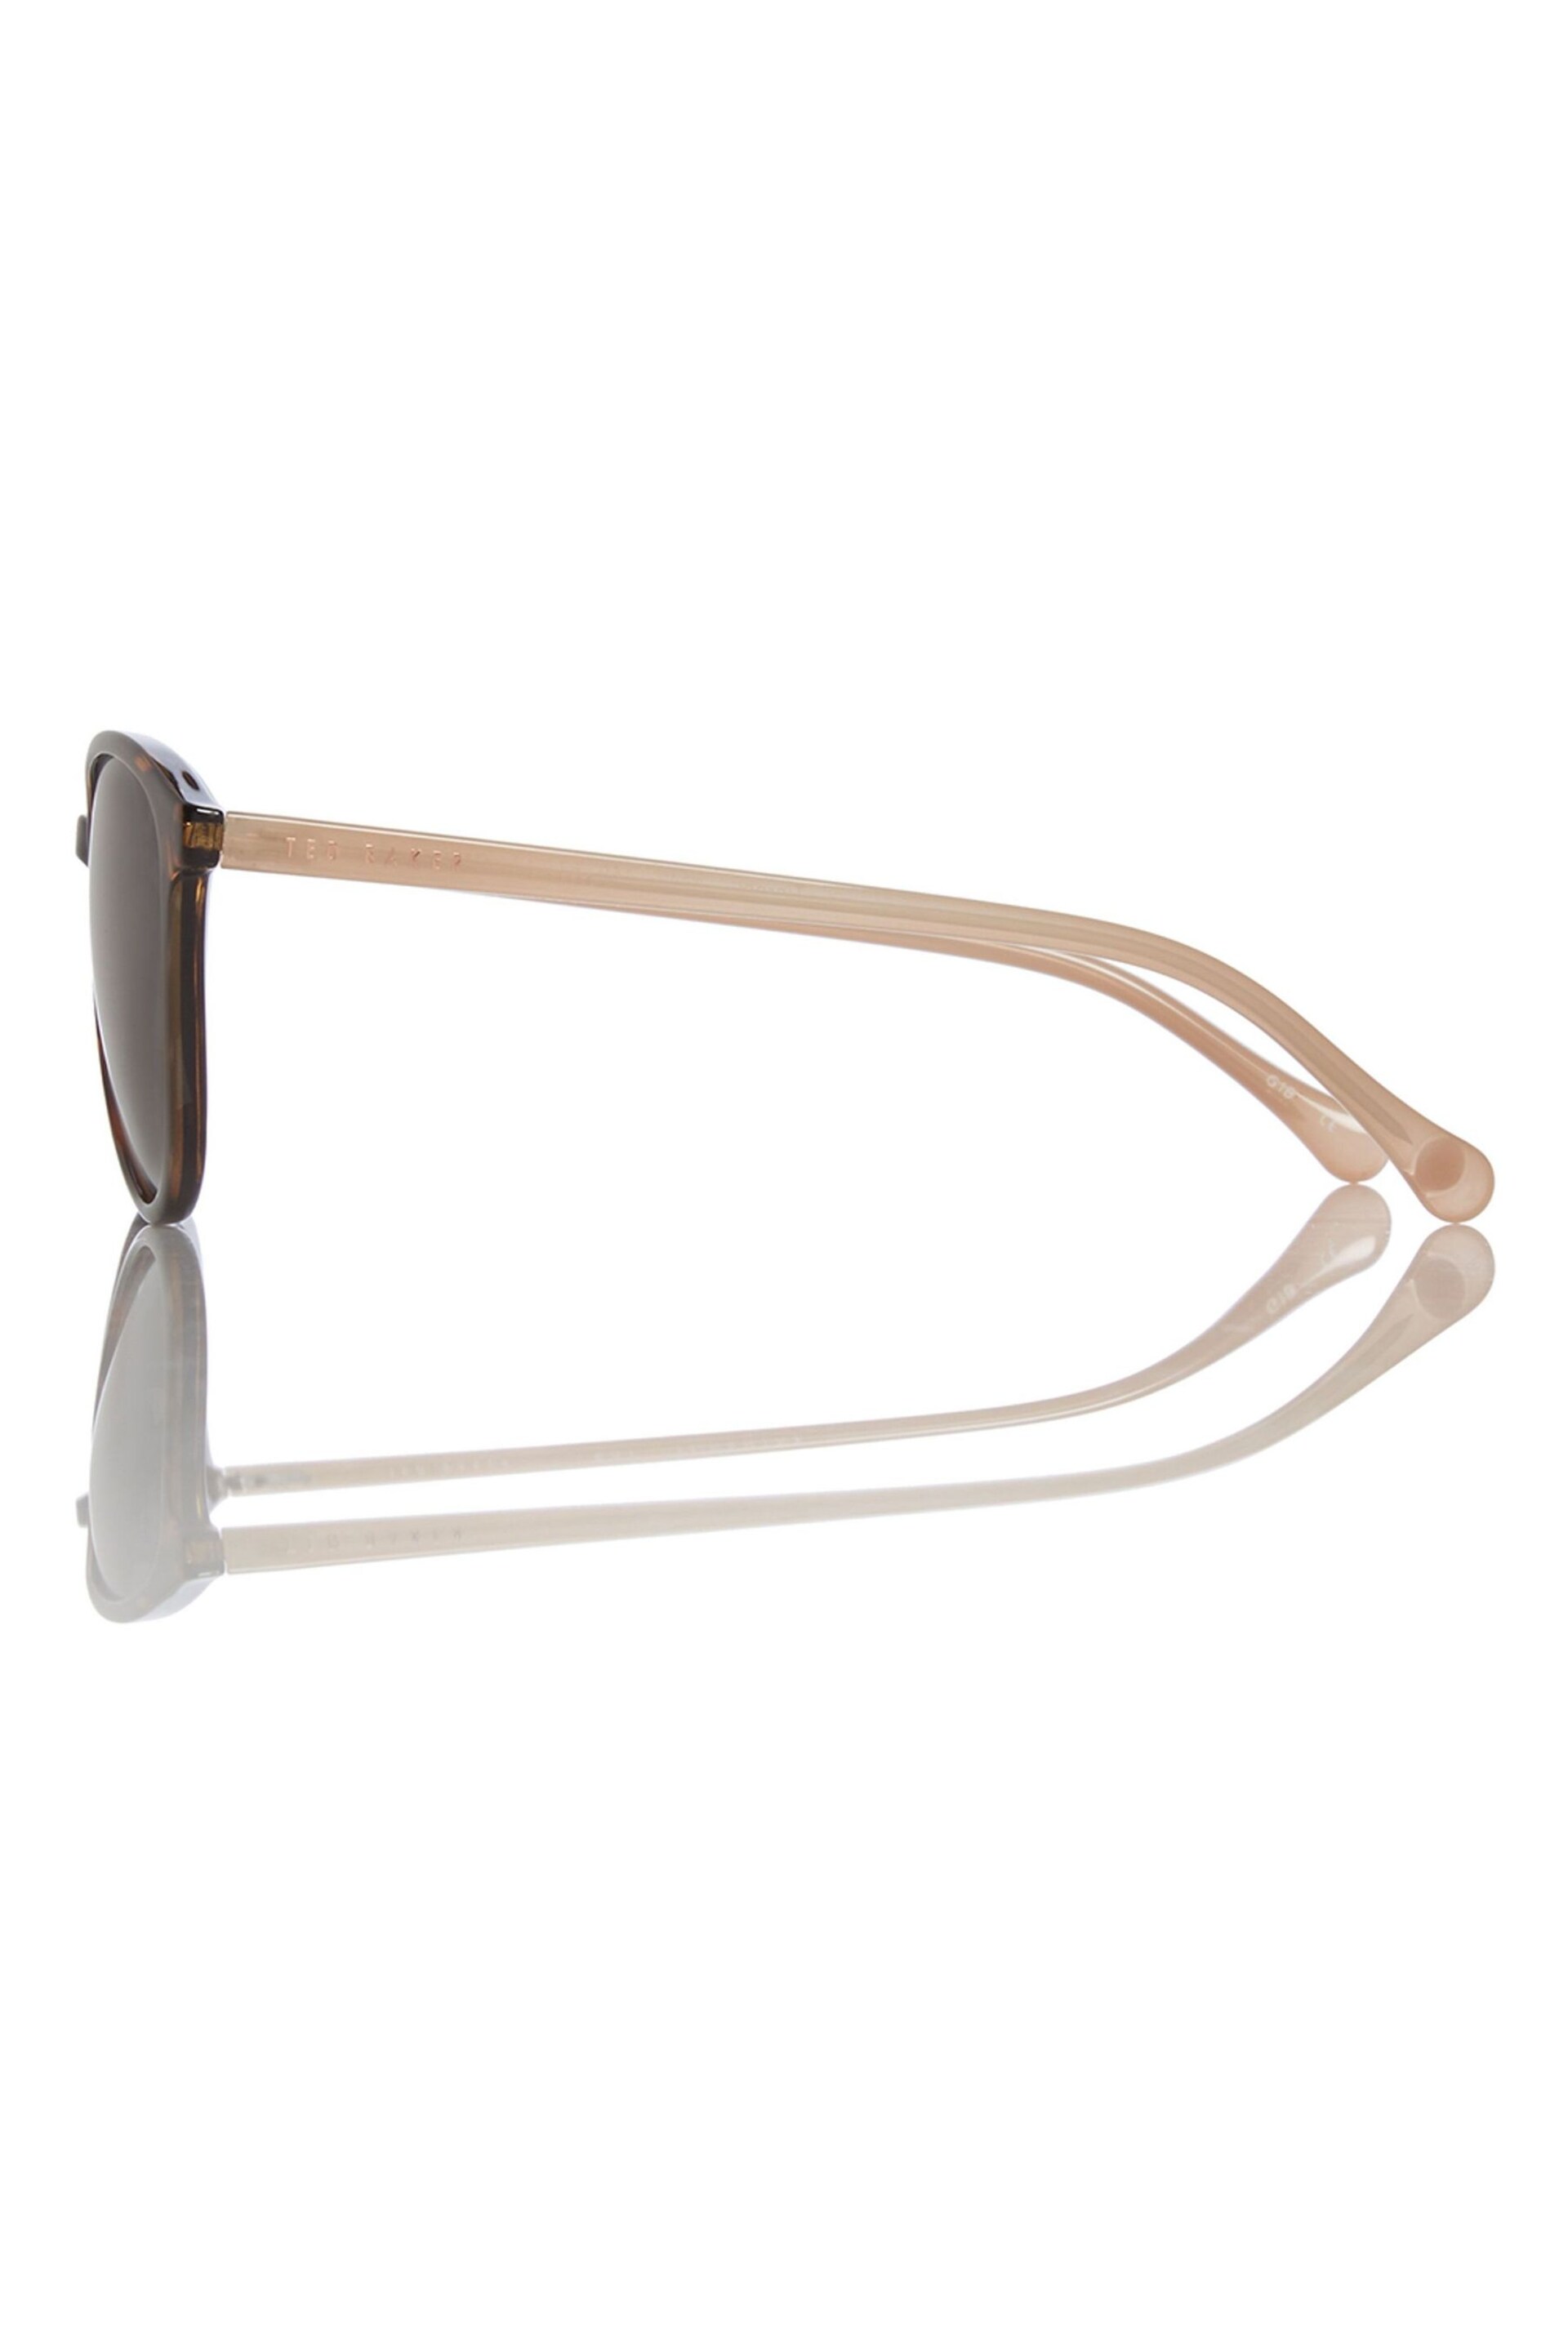 Ted Baker Tortoiseshell Brown Classic Round Eye Sunglasses - Image 3 of 5